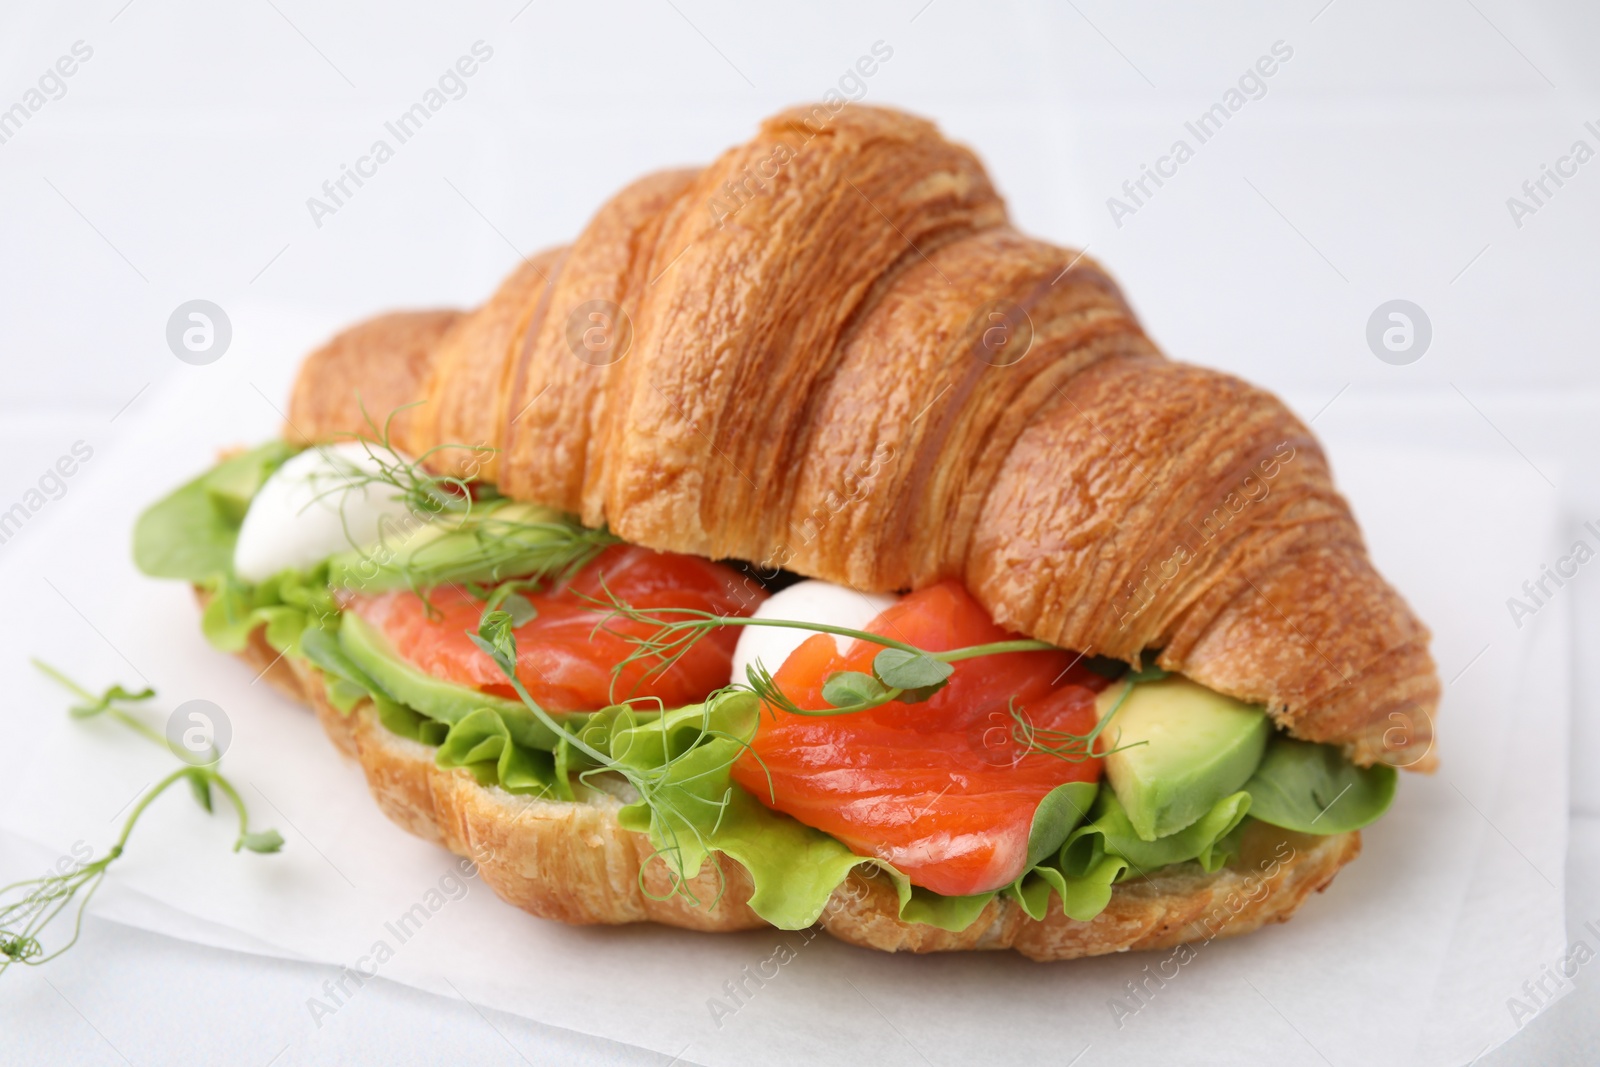 Photo of Tasty croissant with salmon, avocado, mozzarella and lettuce on white table, closeup